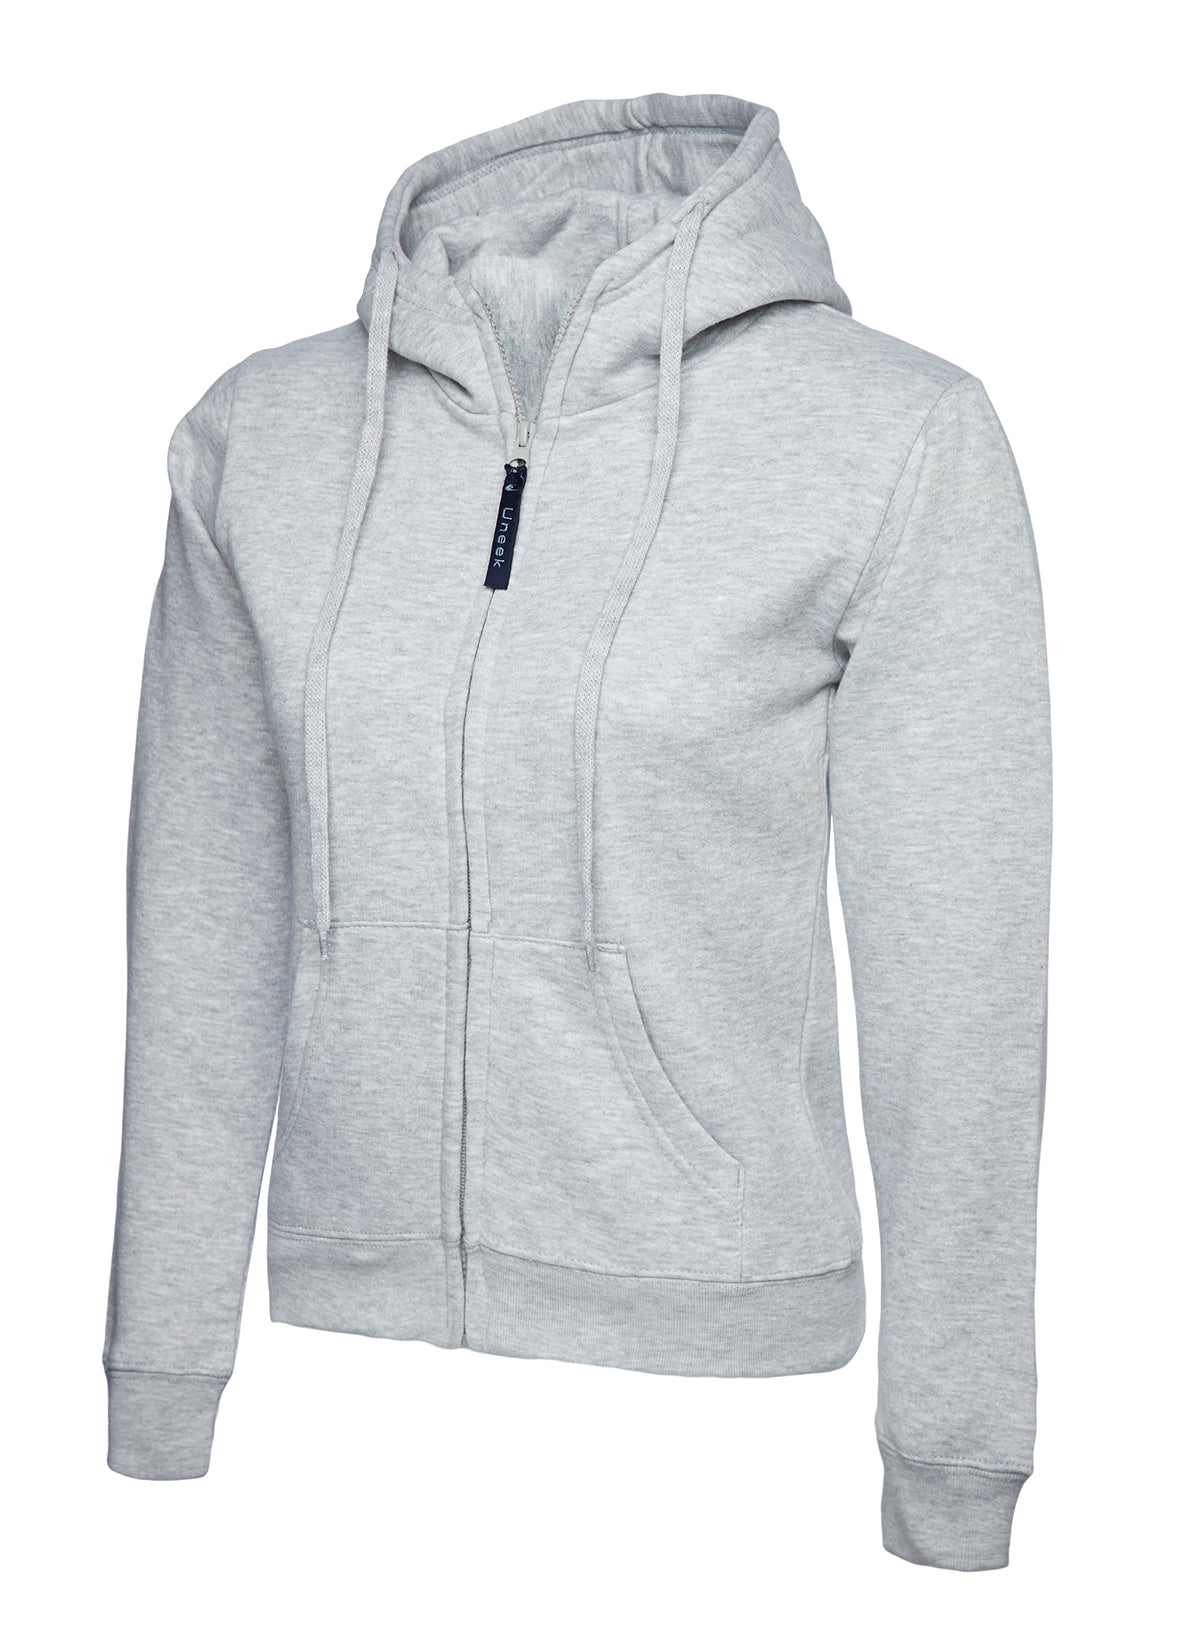 Uneek Ladies Classic Full Zip Hooded Sweatshirt UC505 - Heather Grey